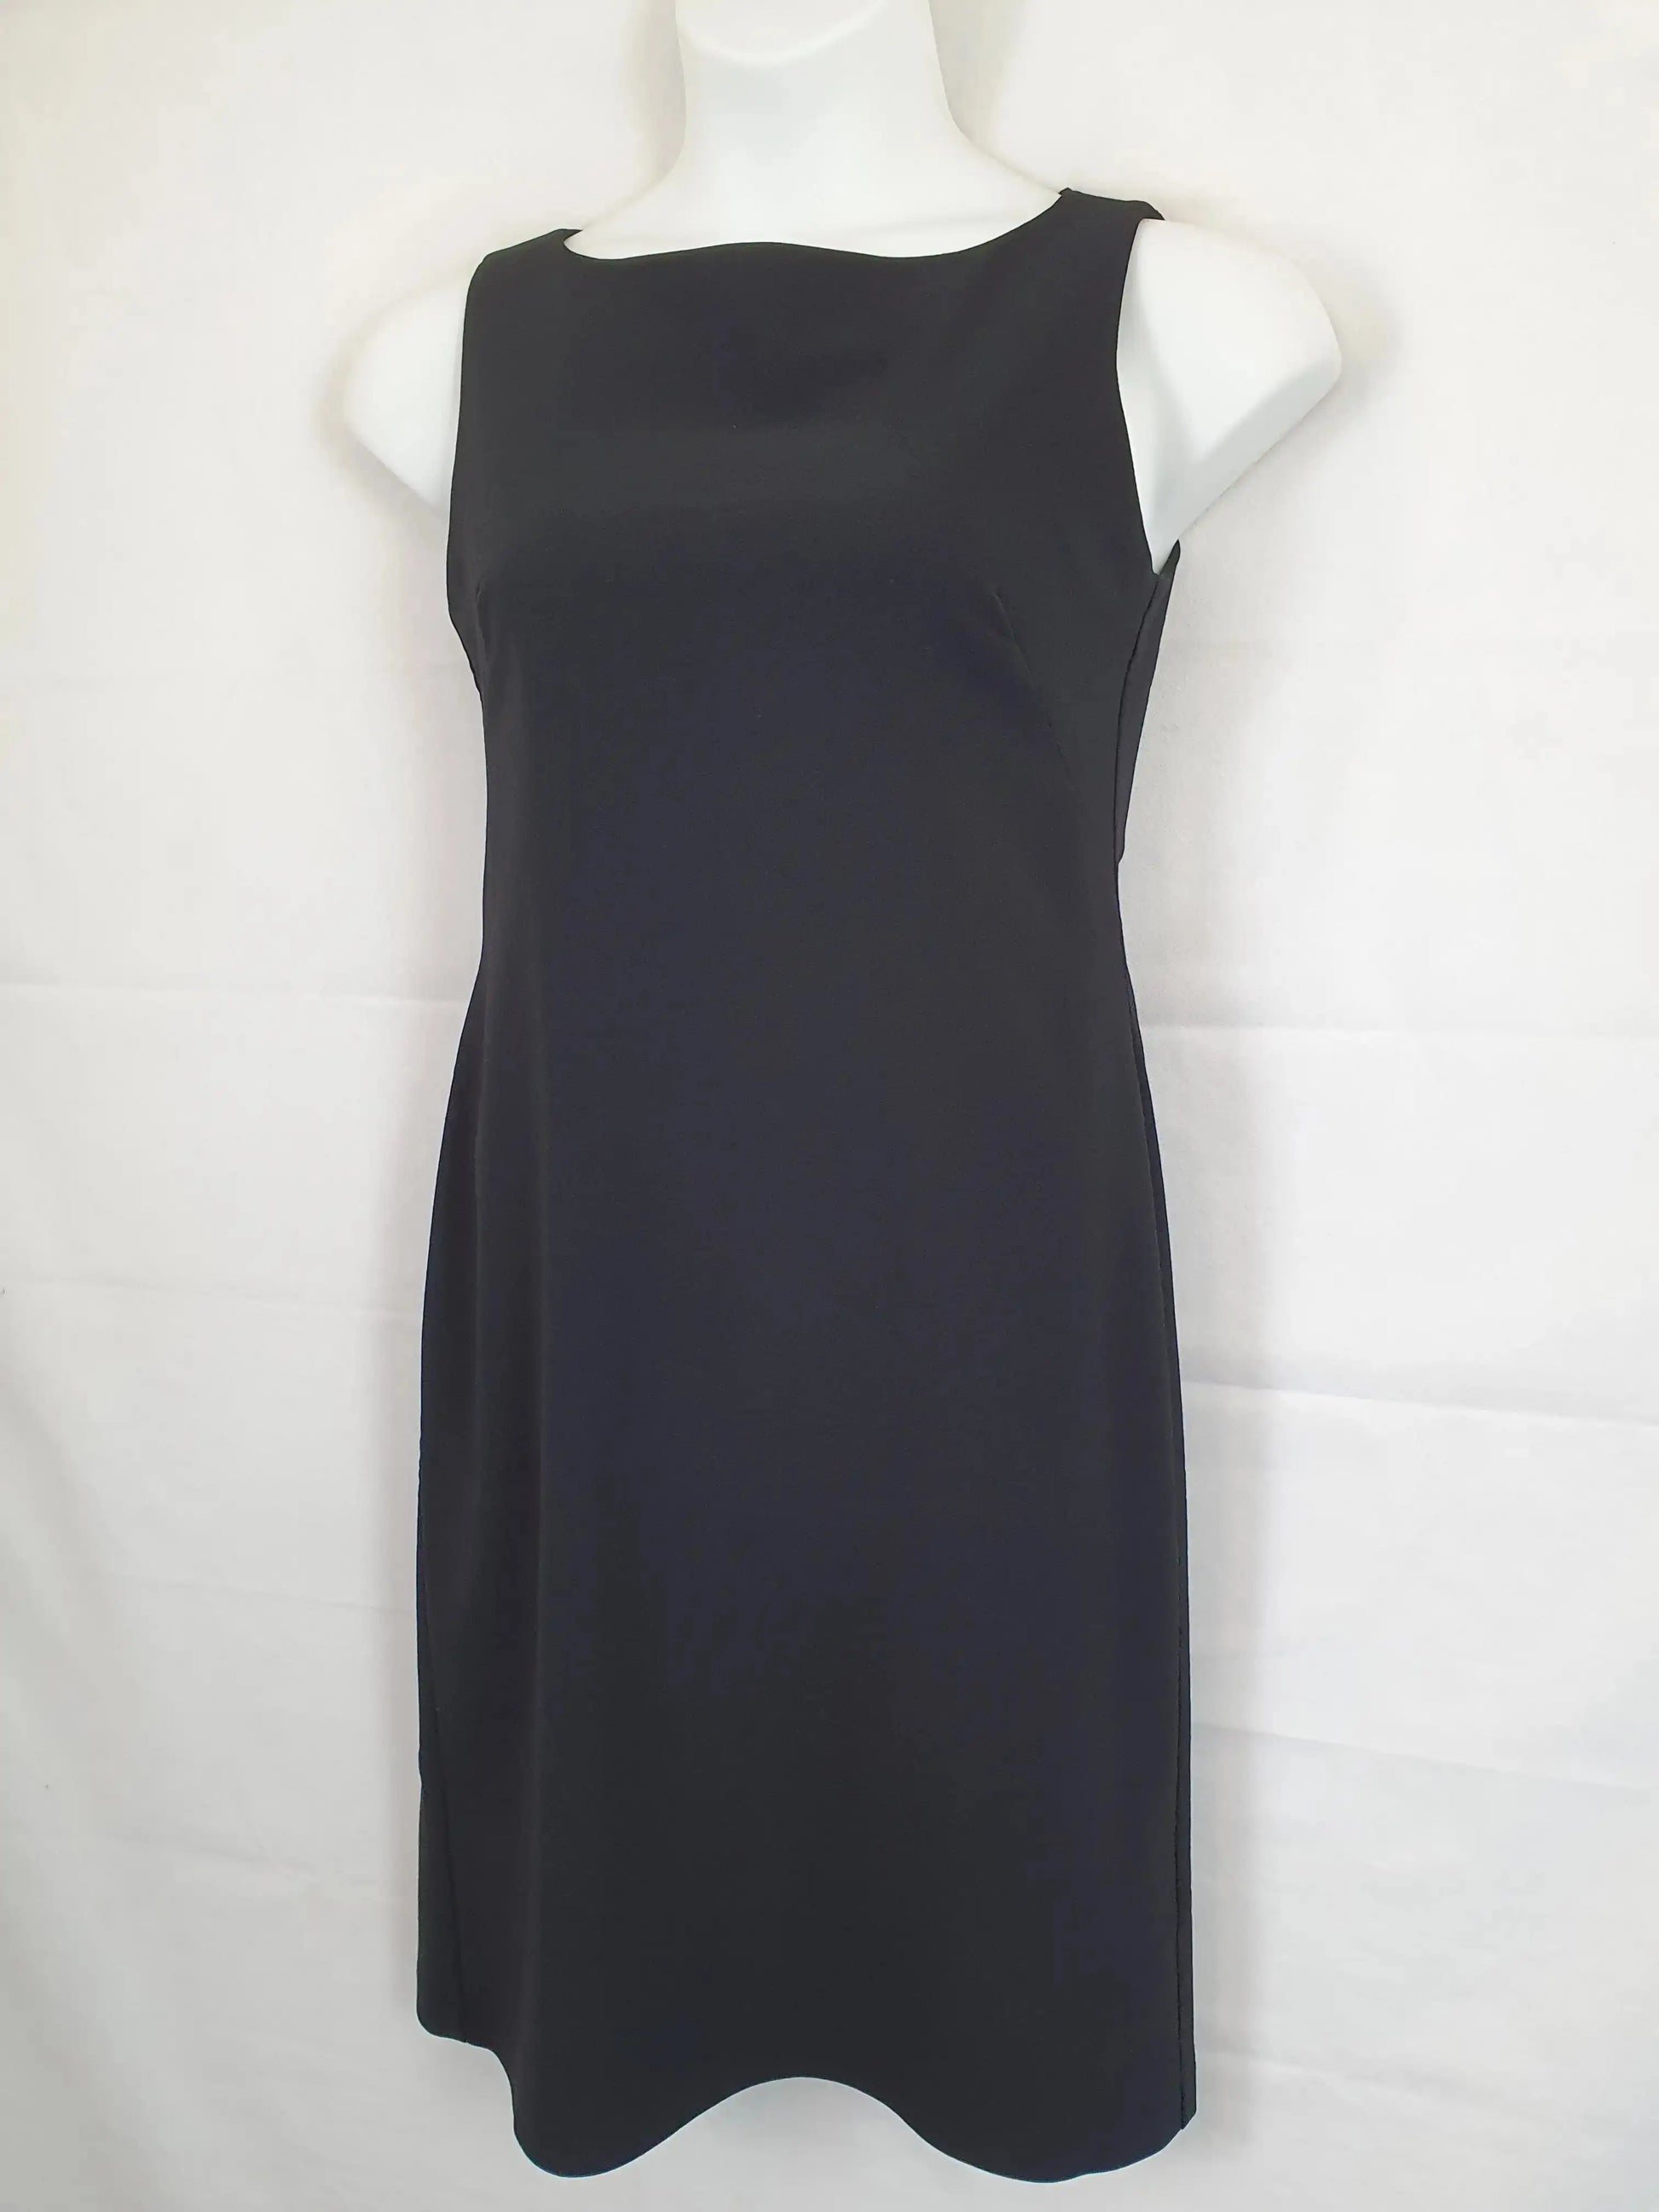 Club Petites Classic Little Black Dress Mini Dress Size 12 Petite by SwapUp-Online Second Hand Store-Online Thrift Store